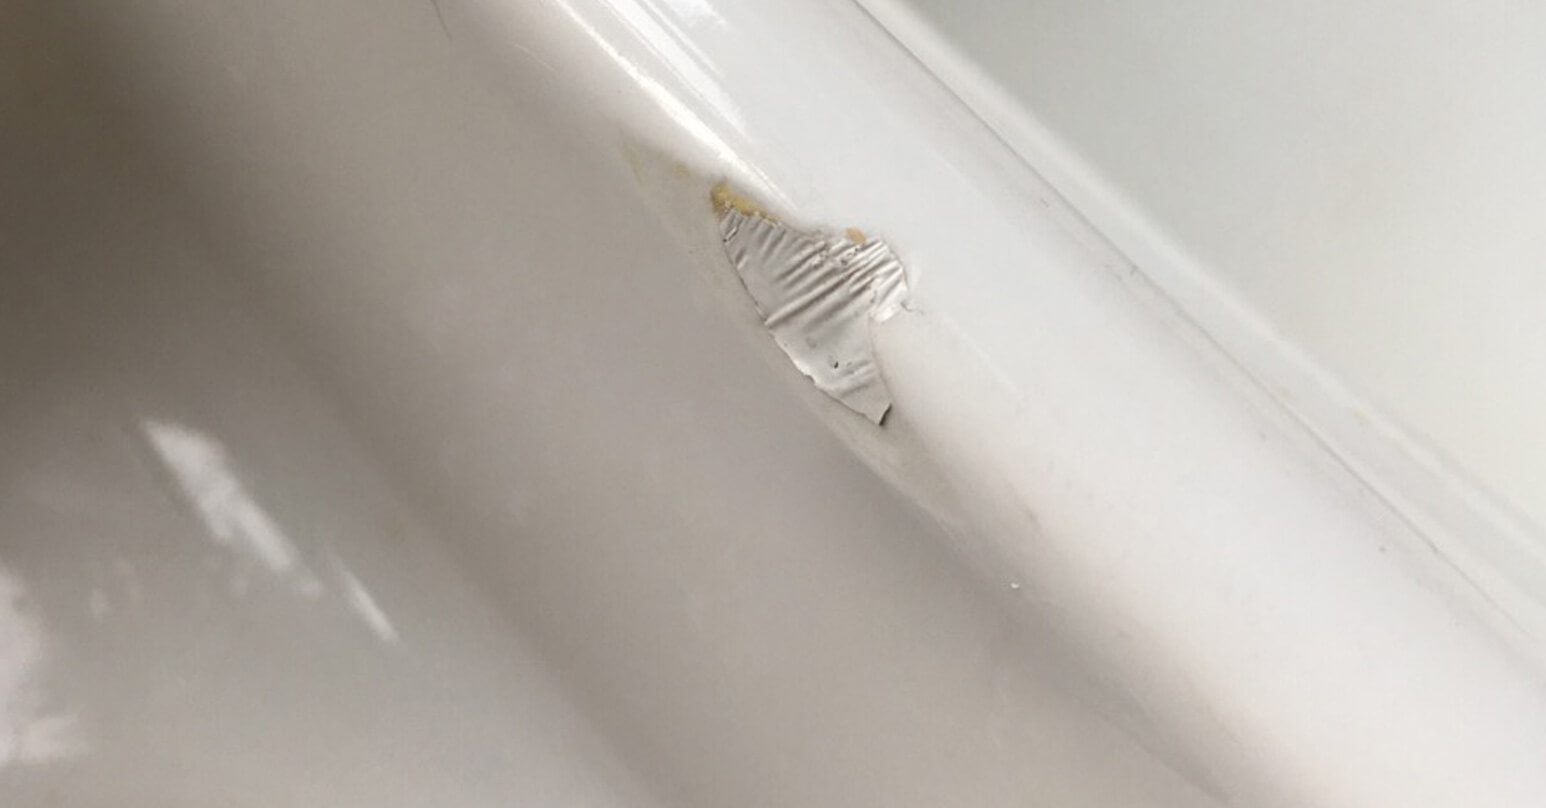 Chipped sink damage